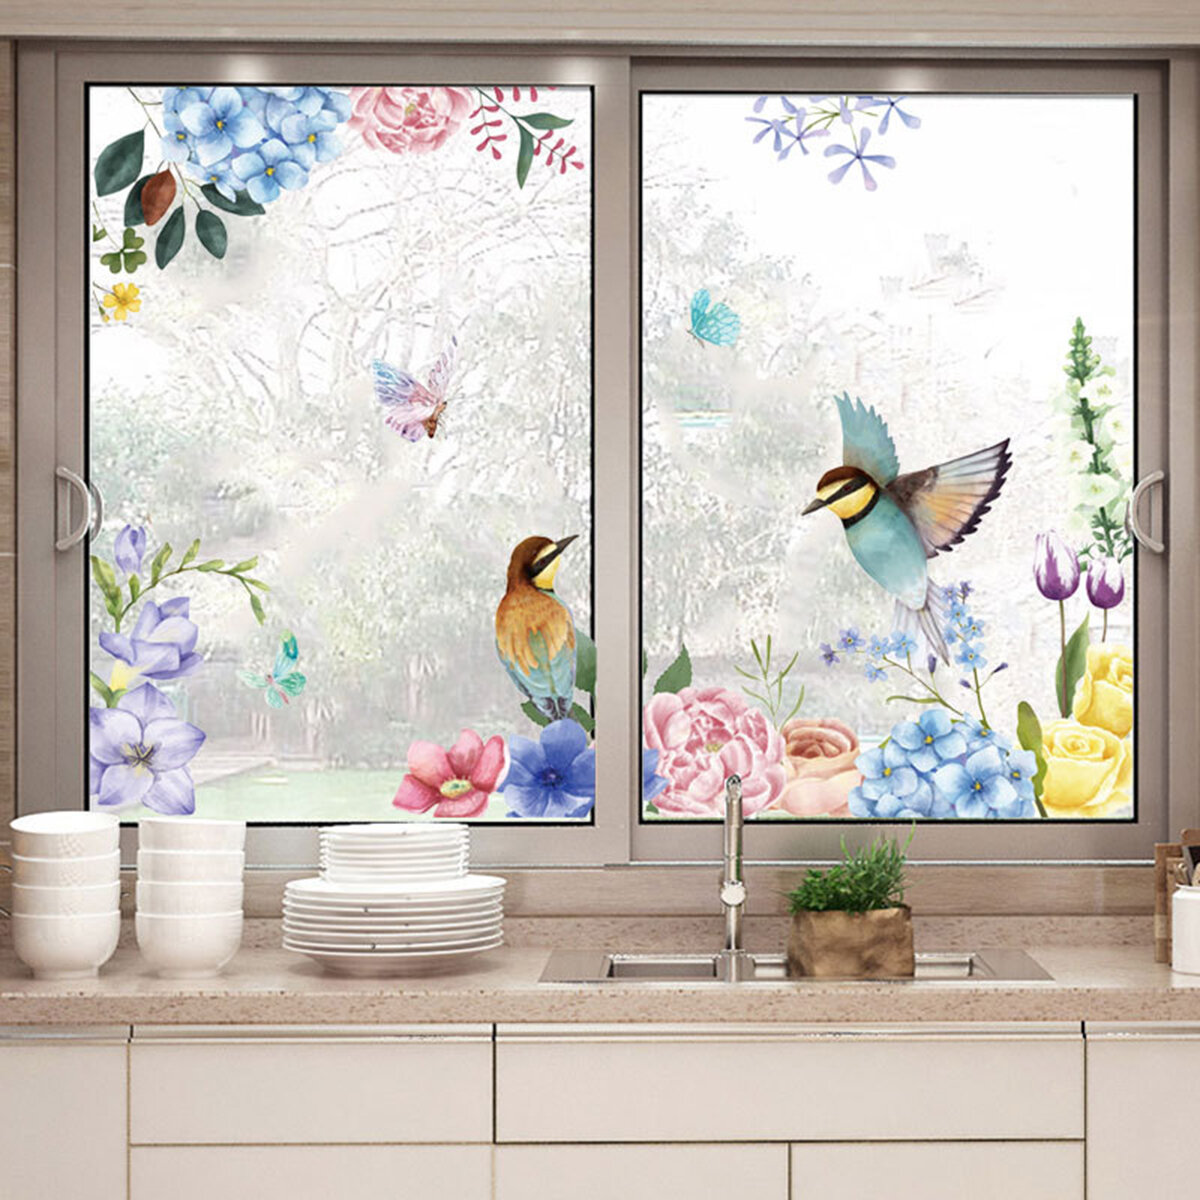 

Flower Birds Butterflies Wall Sticker Decals Art Decor Removable Decal Decoration Kids Baby for Home Office